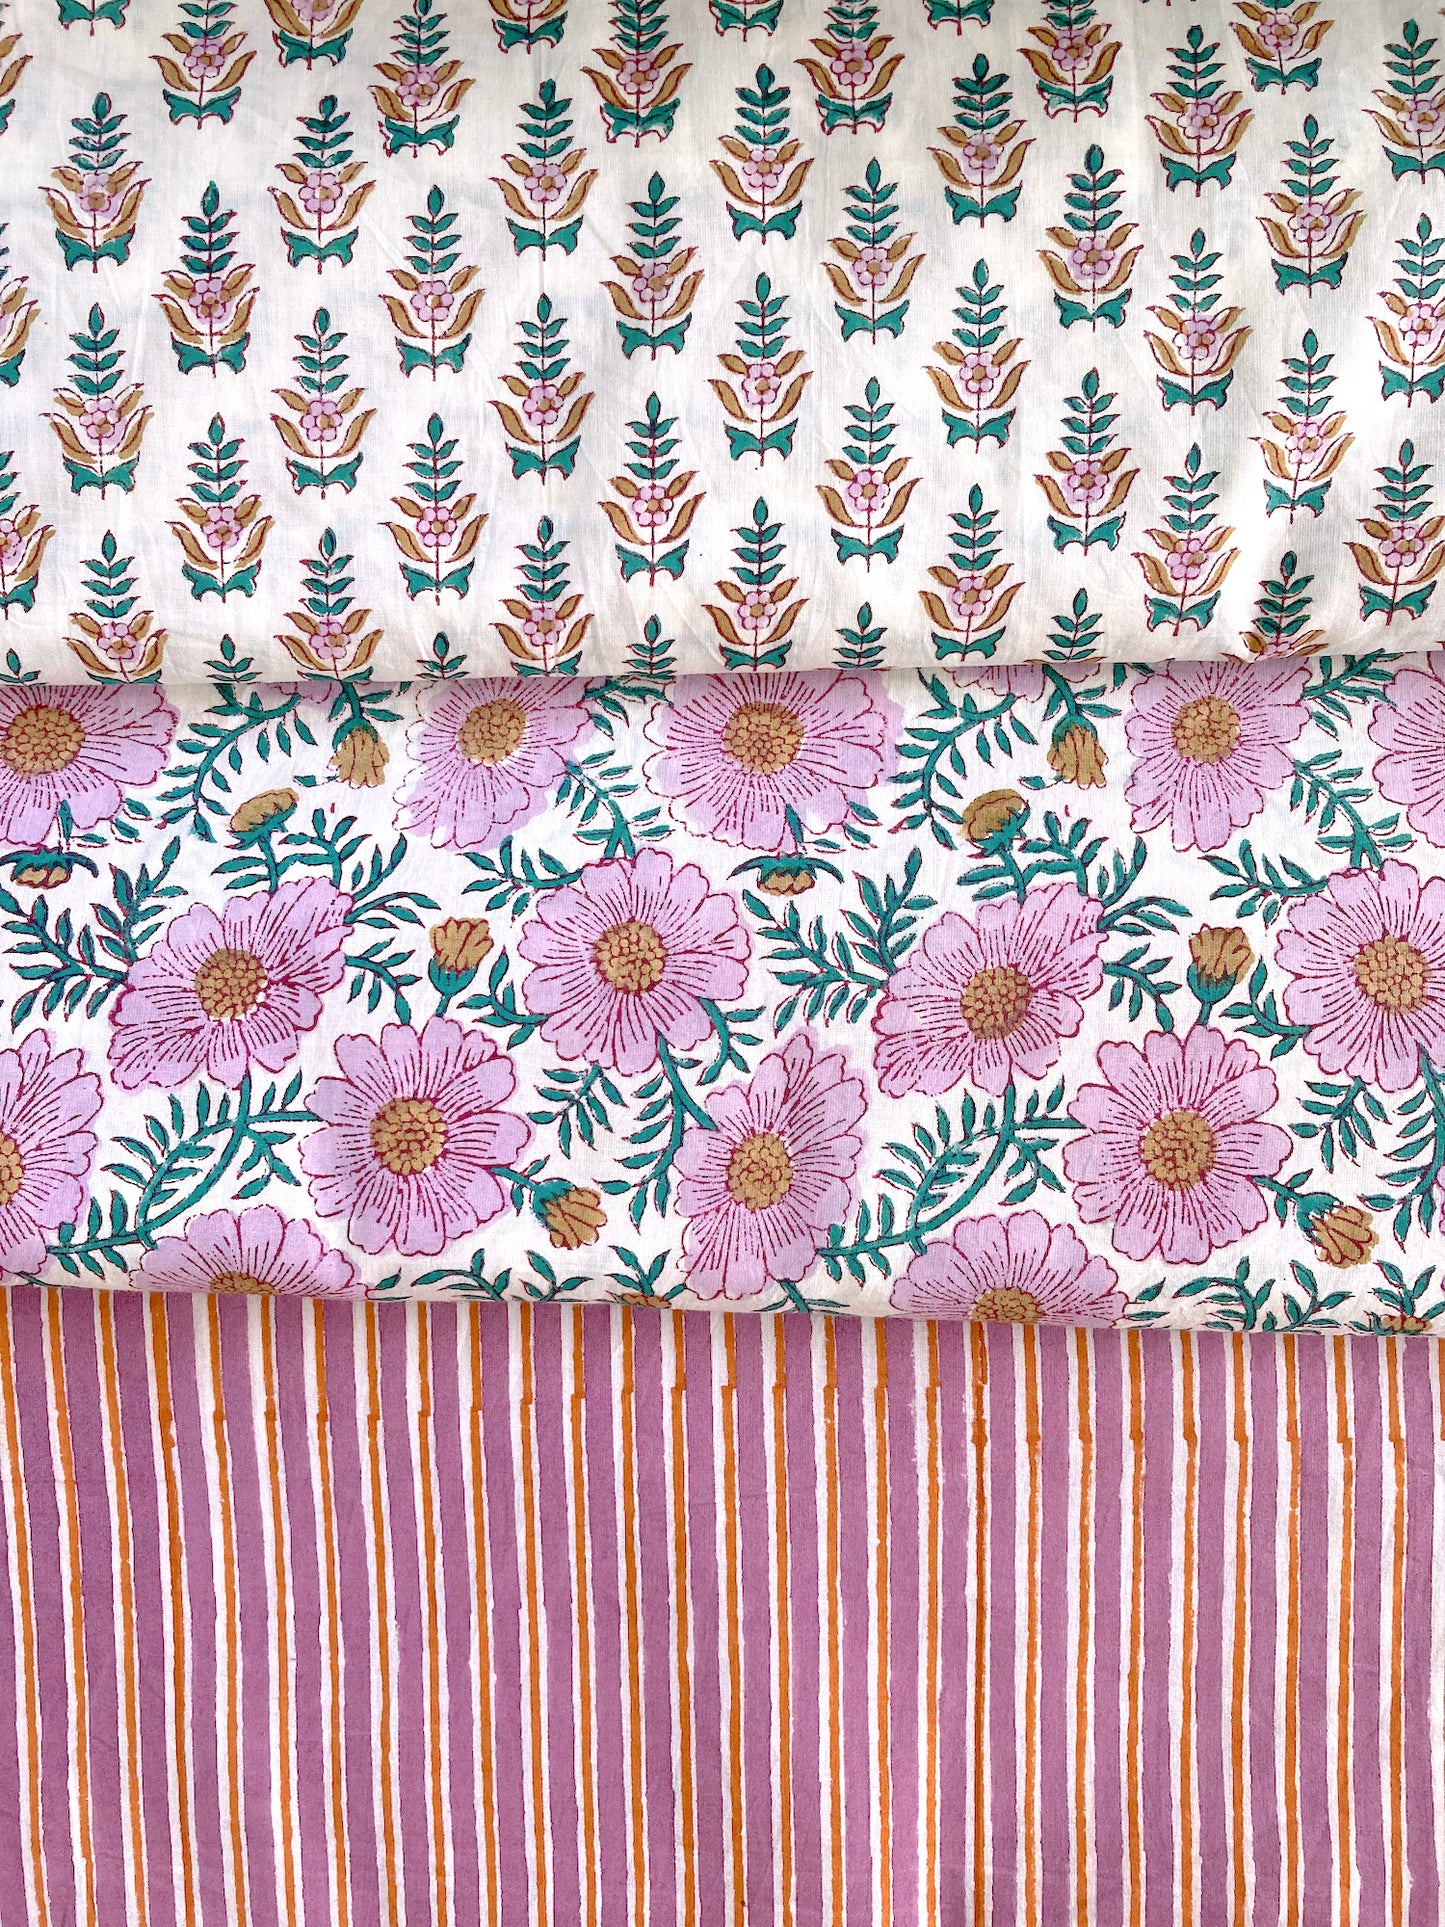 Hand Block Printed Cotton Fabric #185-24 Purple